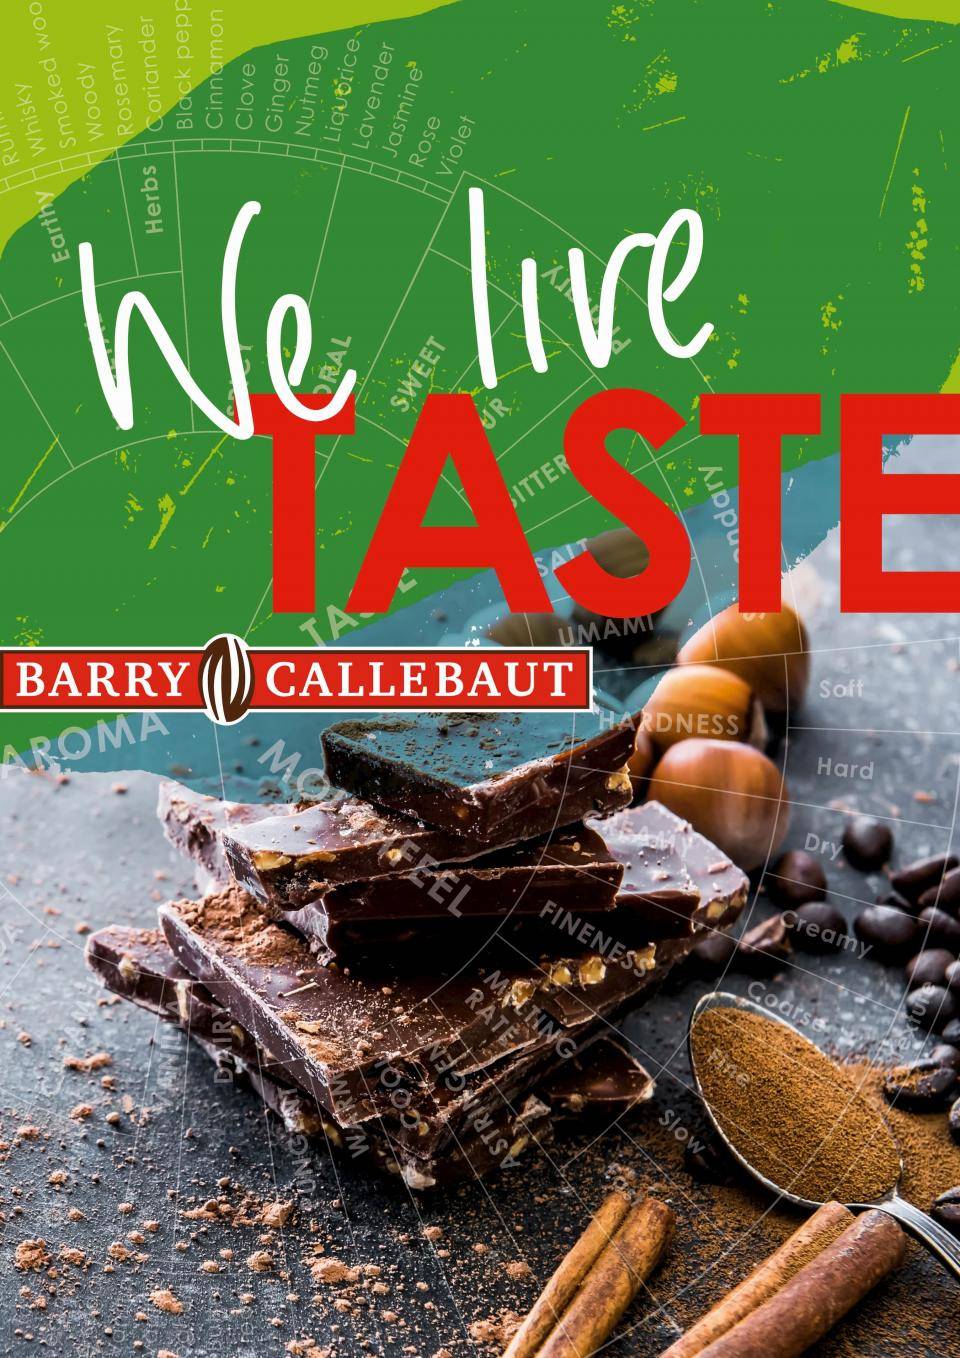 Taste of chocolate - Barry Callebaut